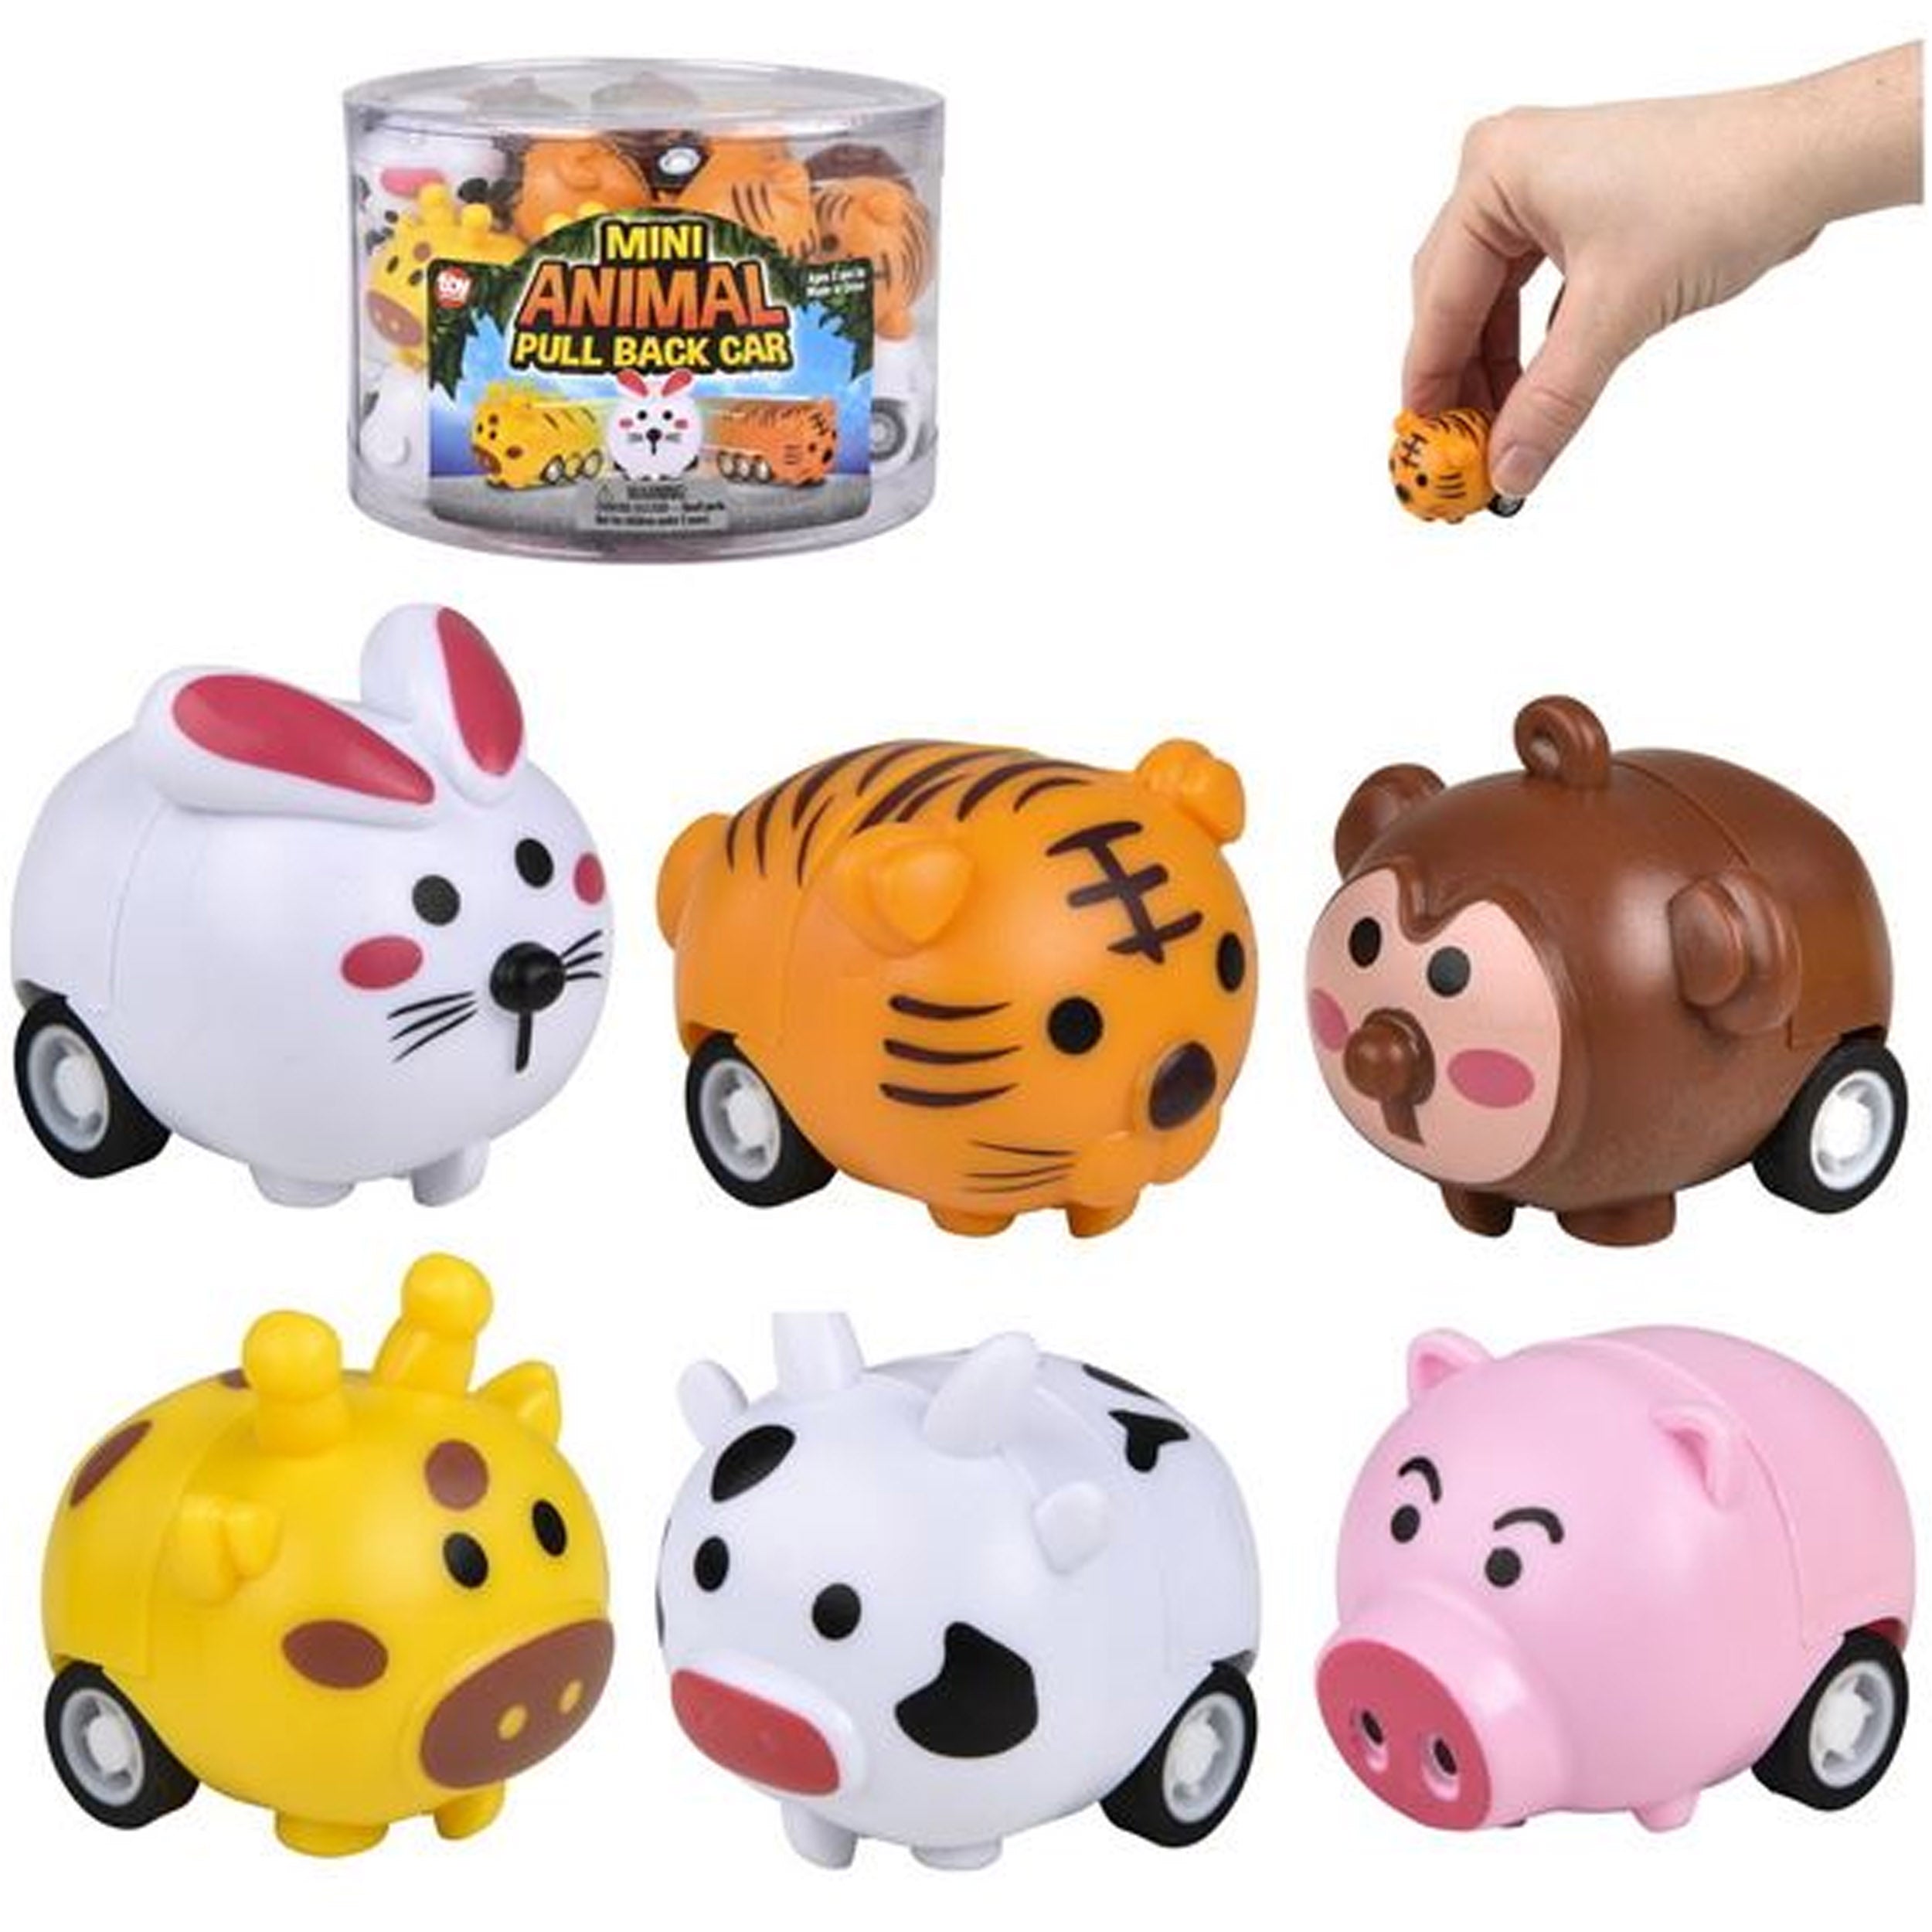 Mini Animal Pull Back Car kids toys (2 Dozen=$16.99)